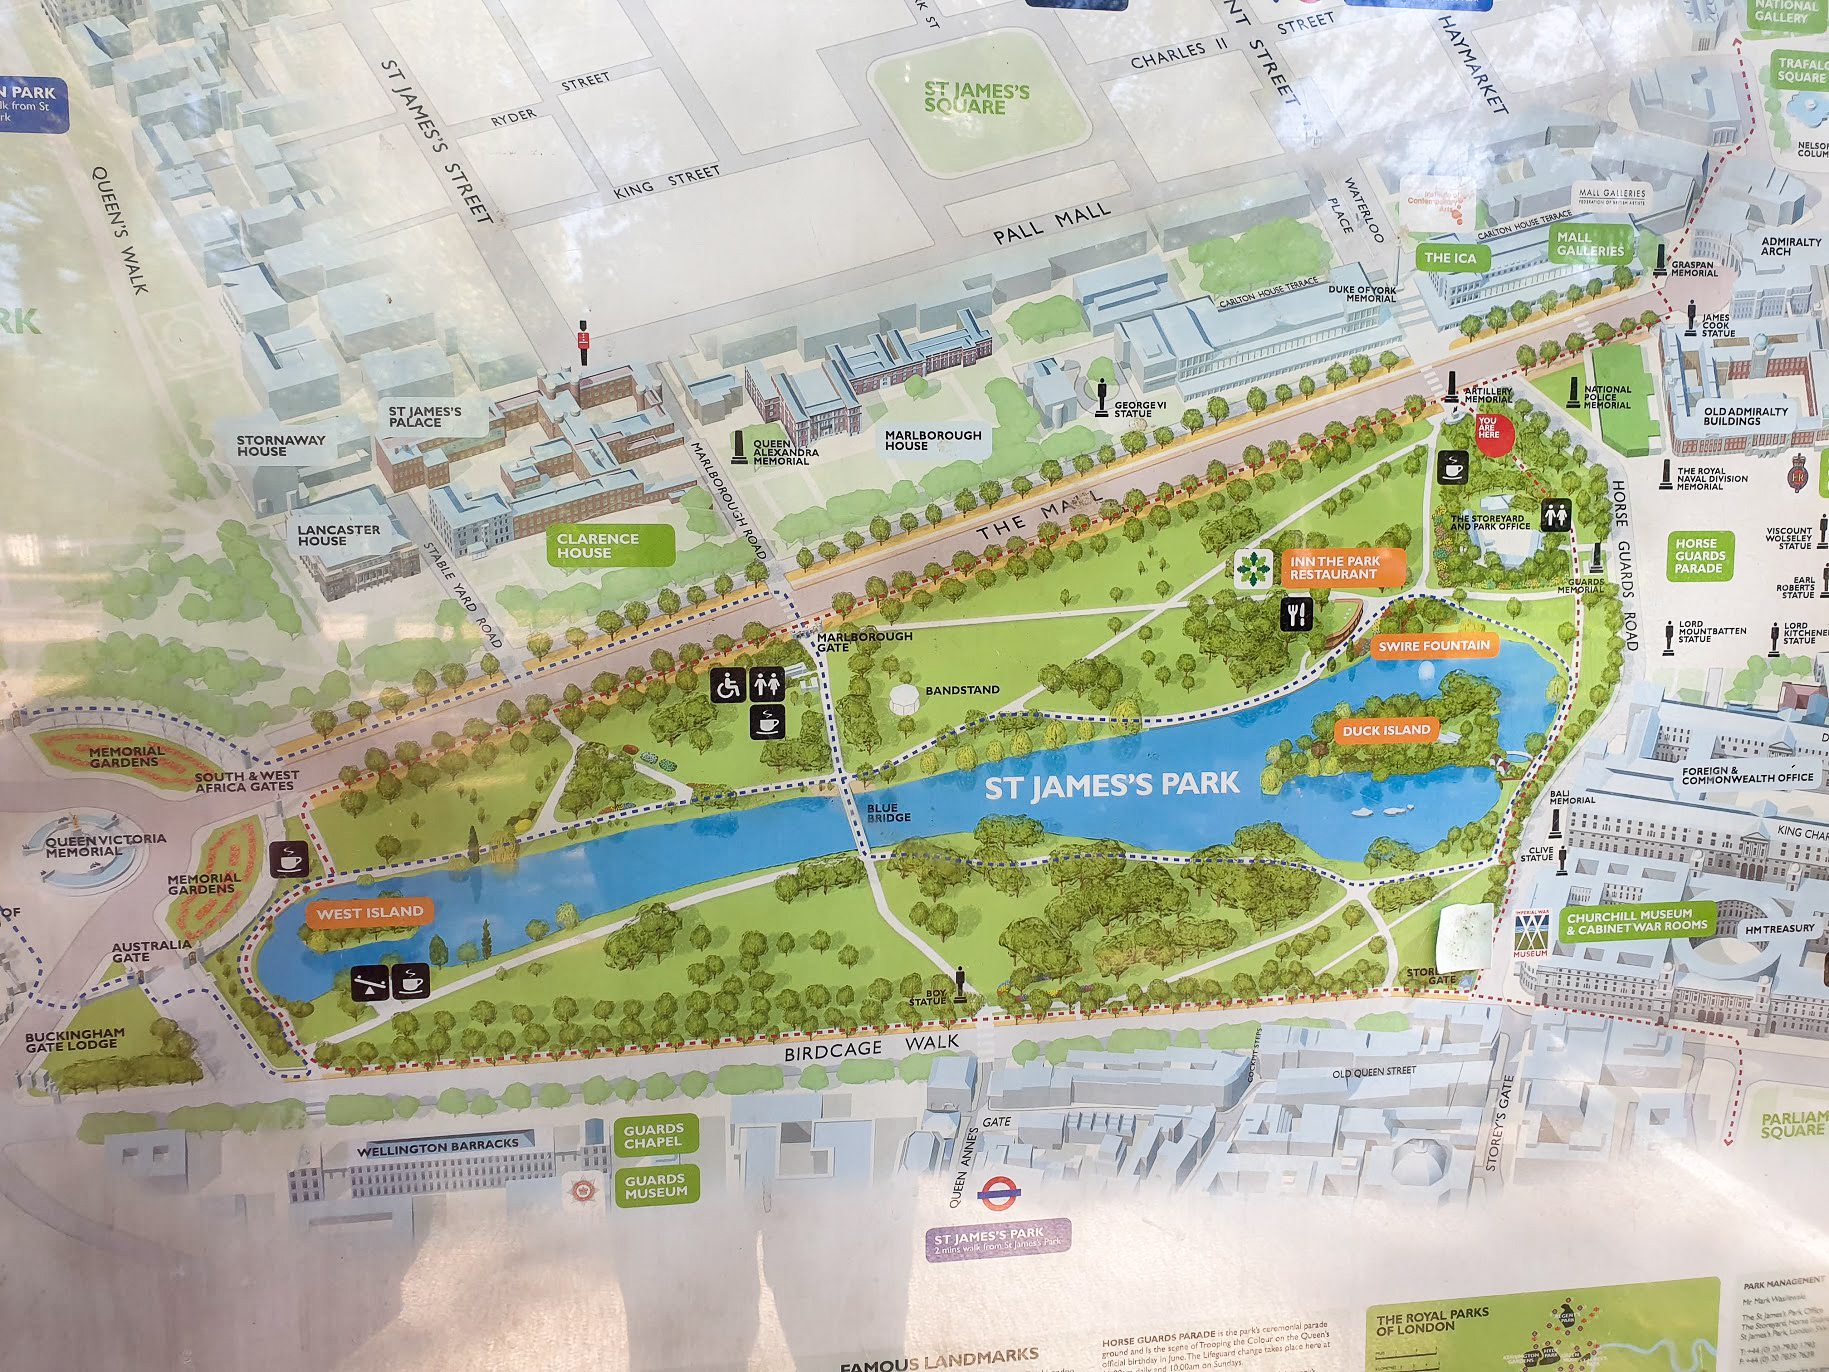 Map of St James's Park London